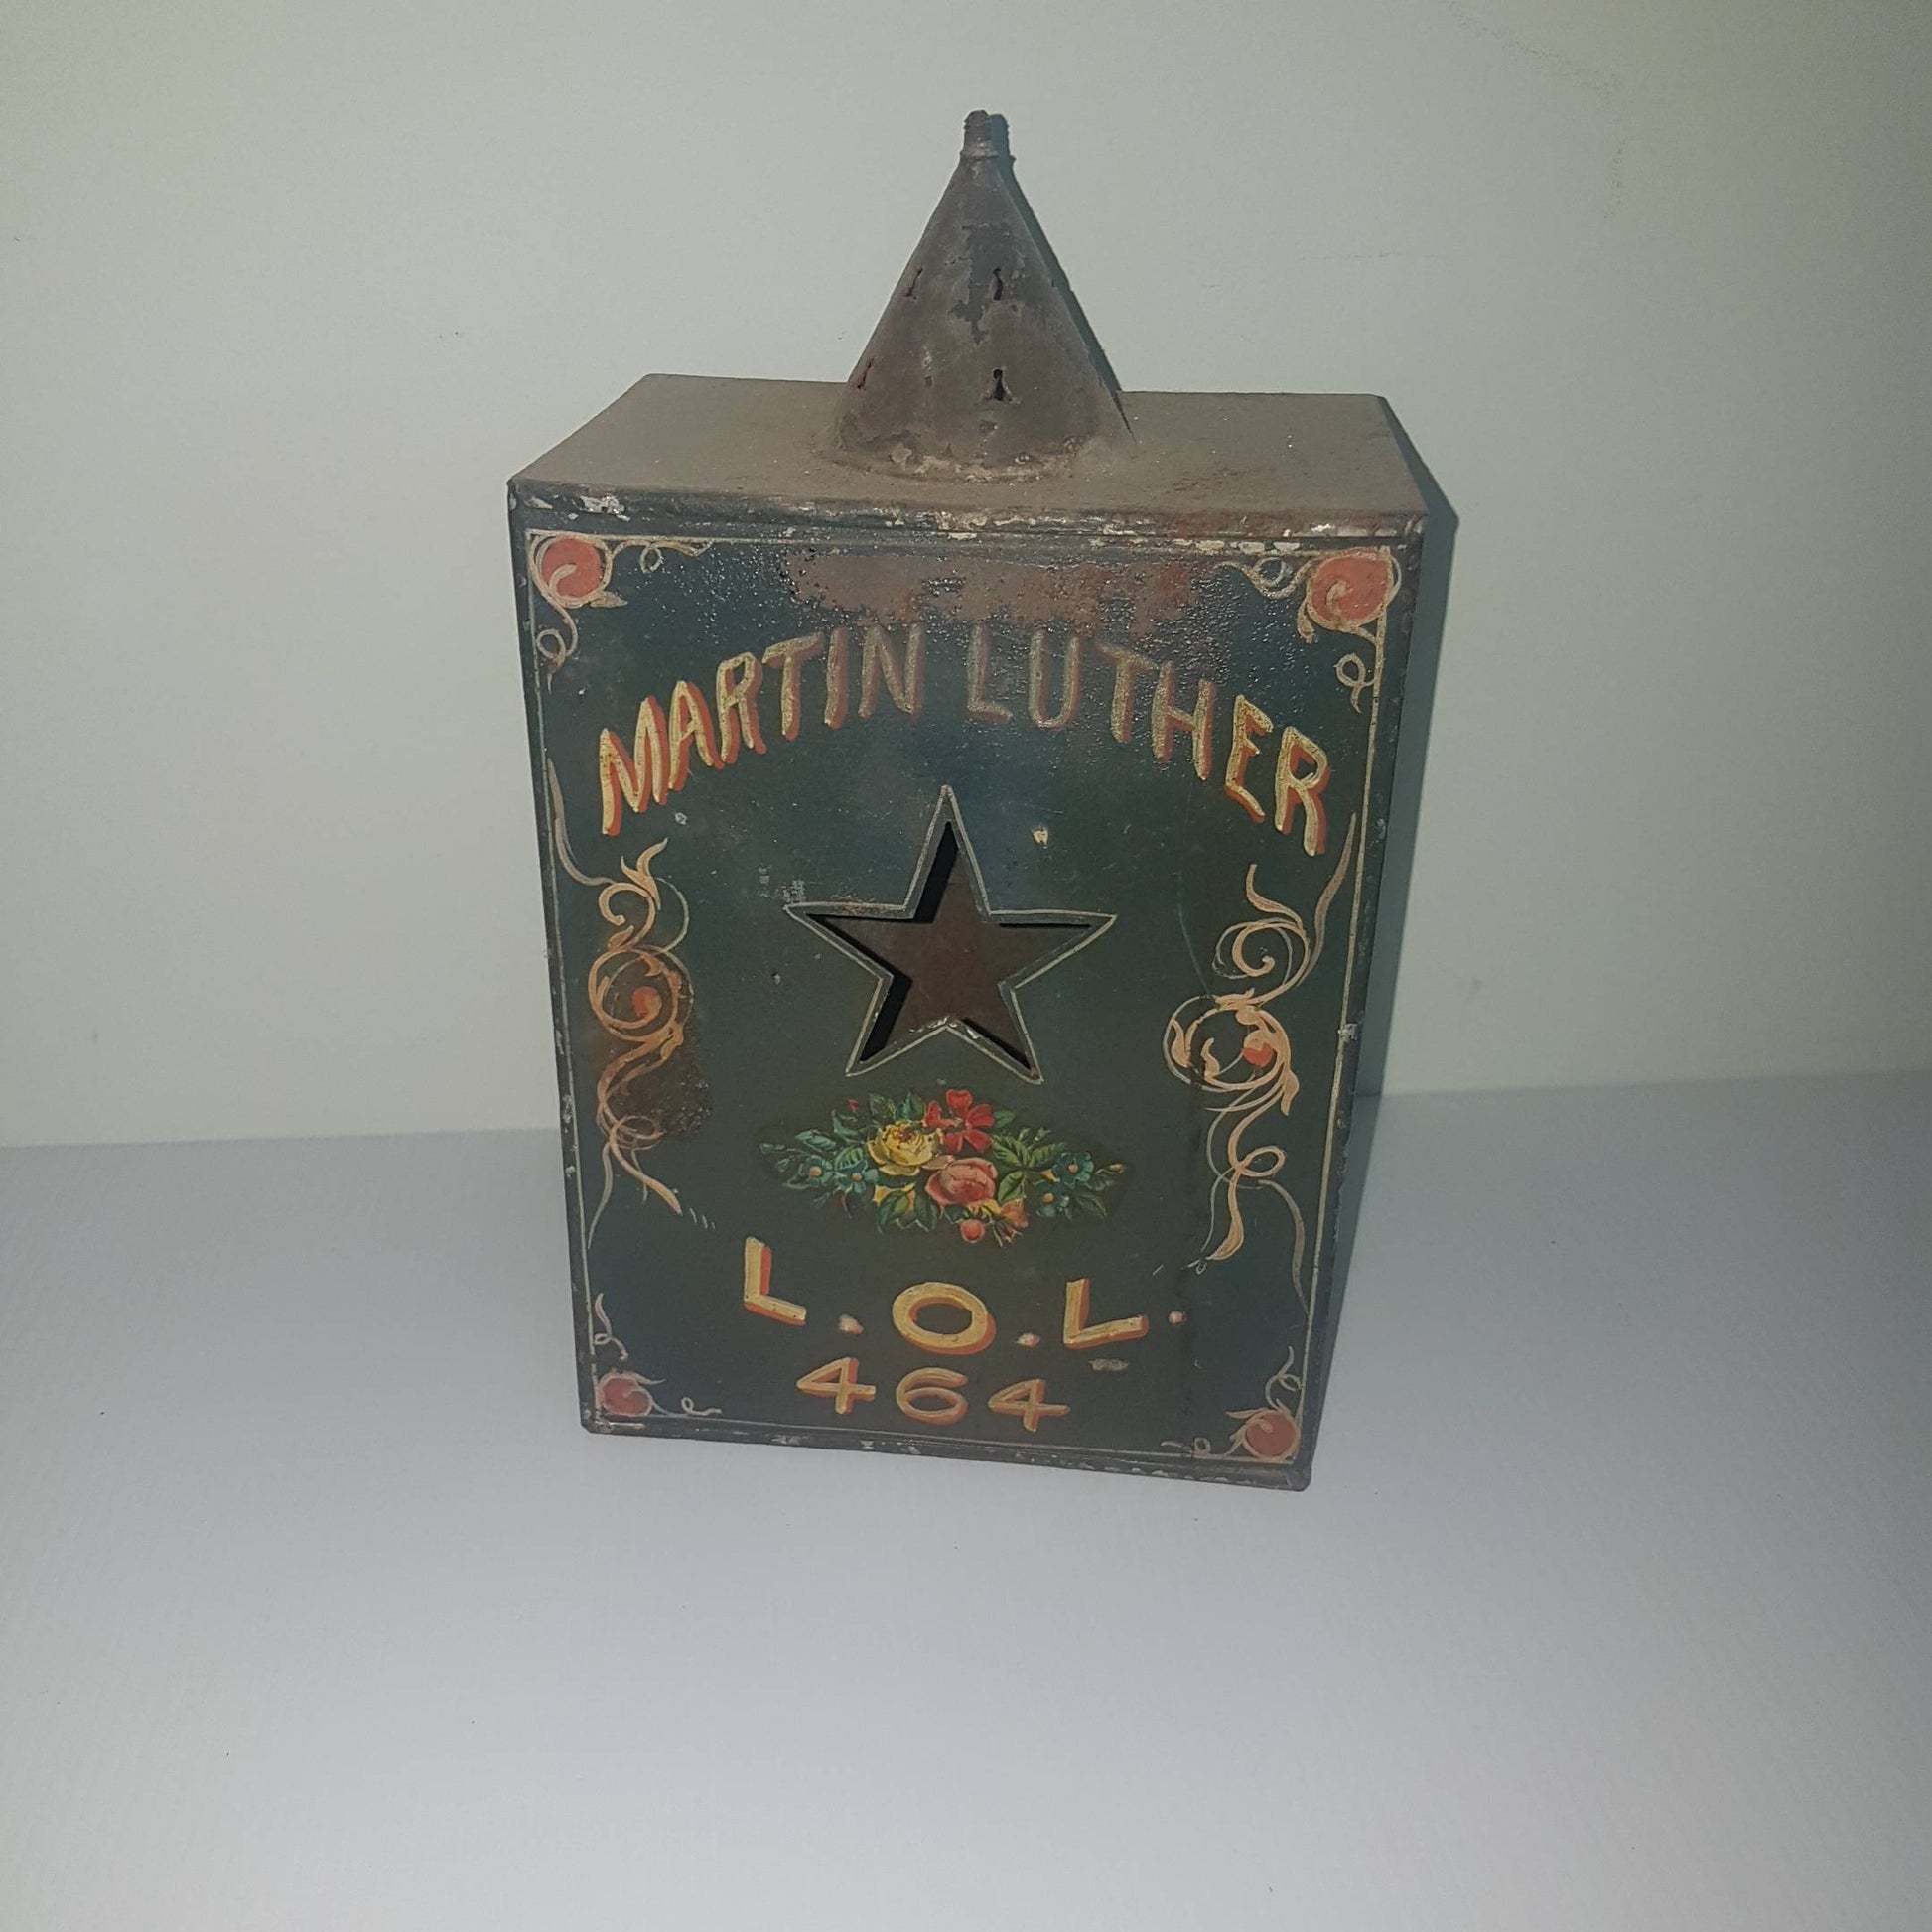 martin luther loyal orange lodge candle box